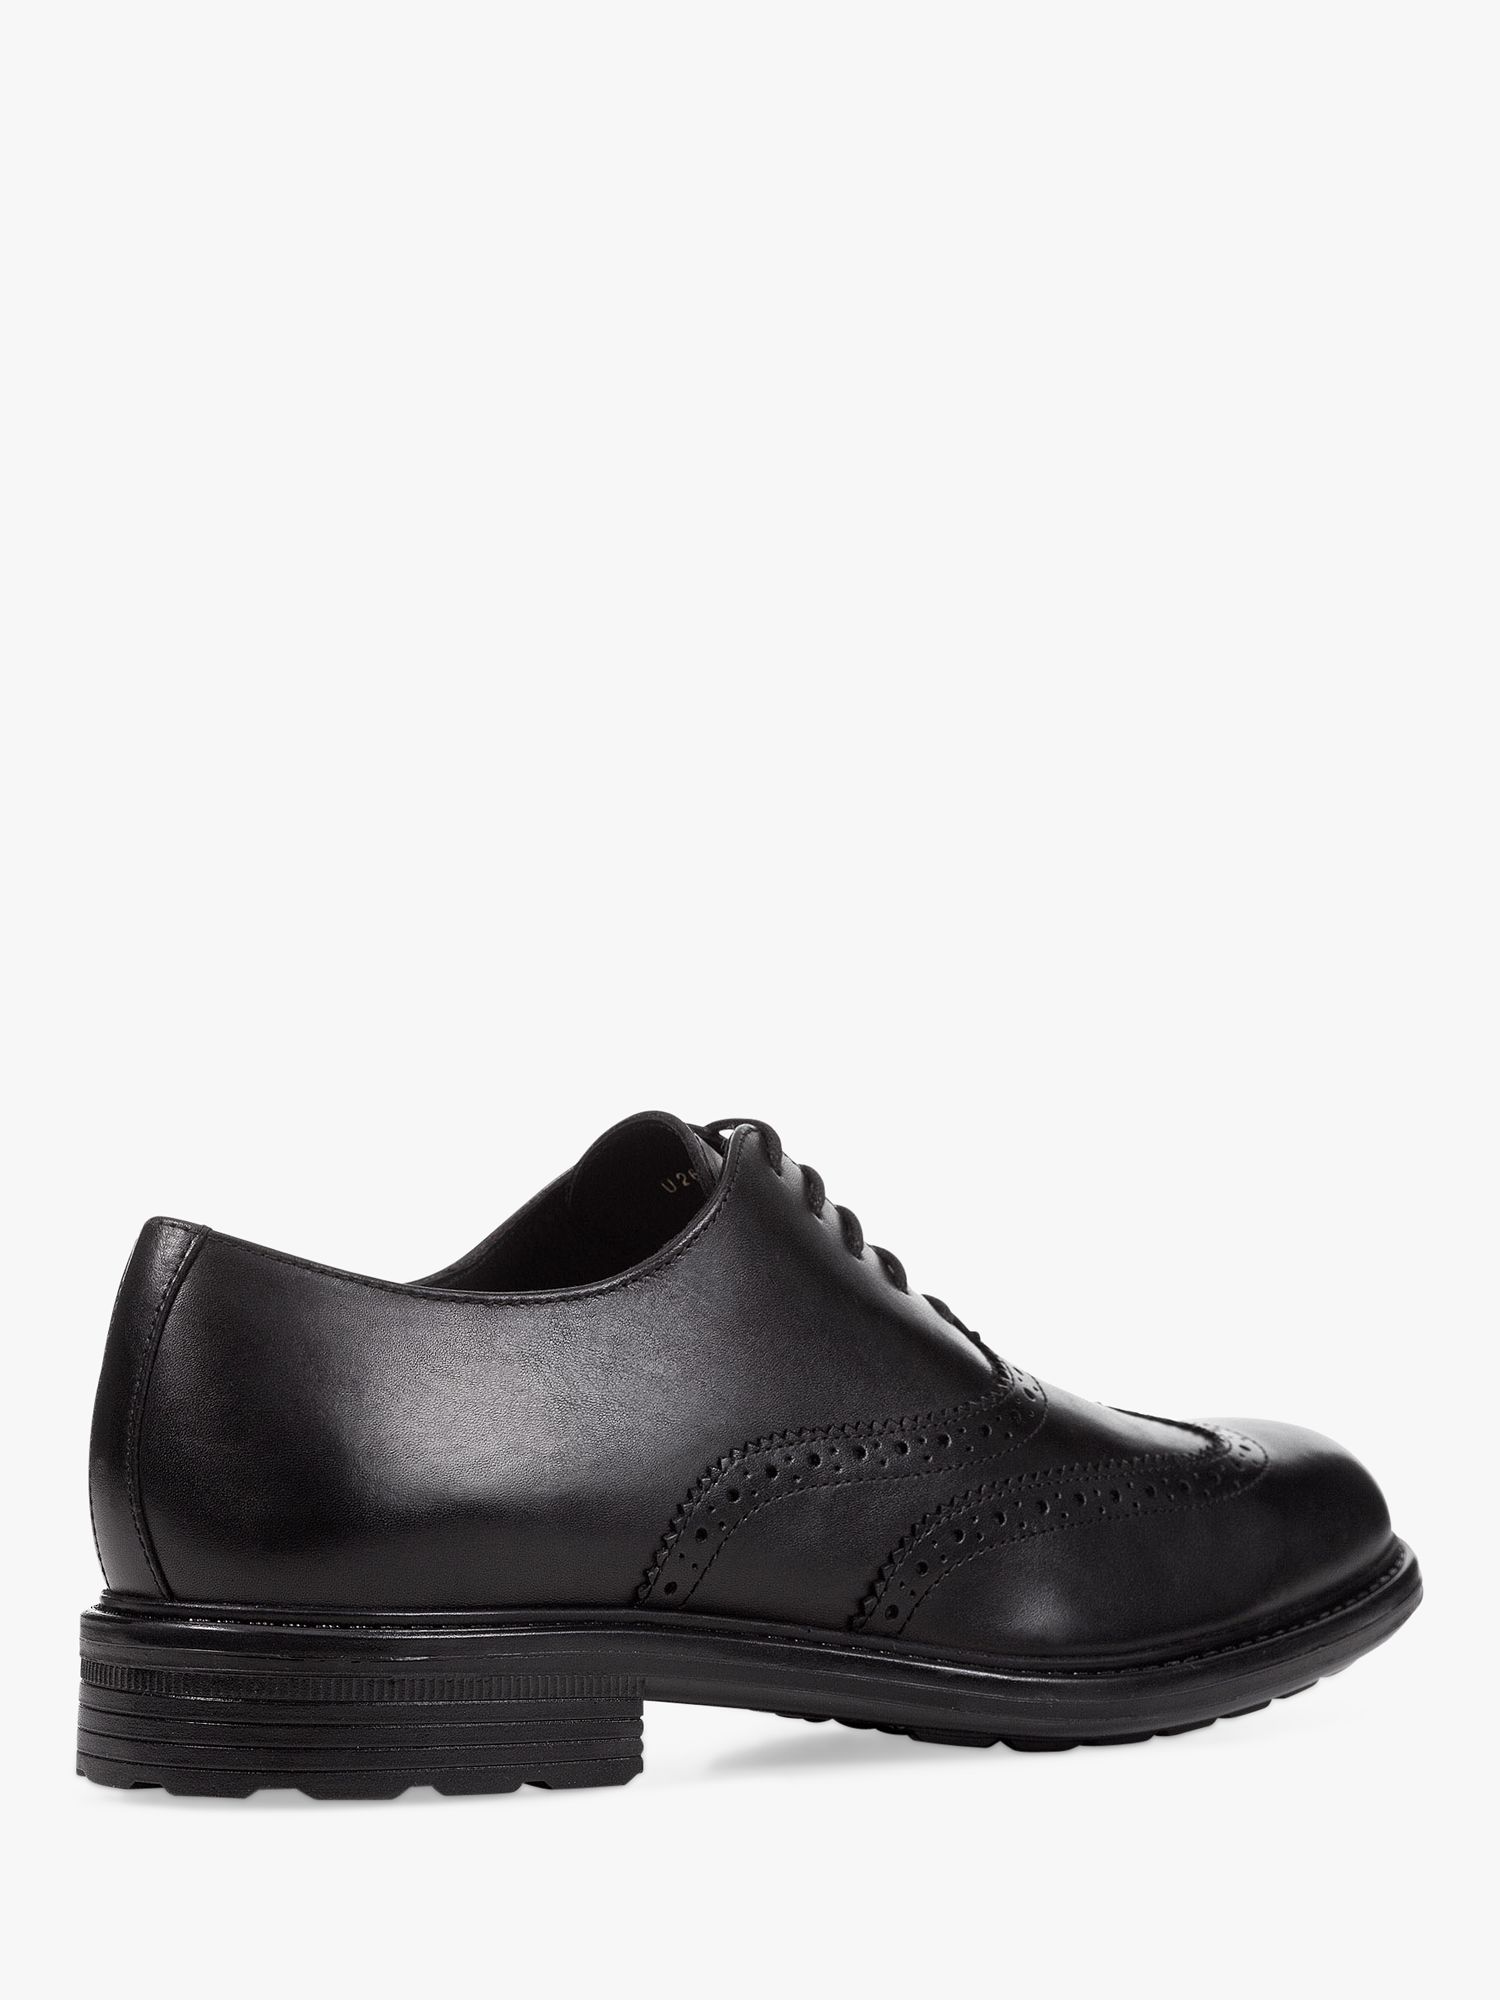 Geox Walk Pleasure Leather Brogue Shoes, Black at John Lewis & Partners